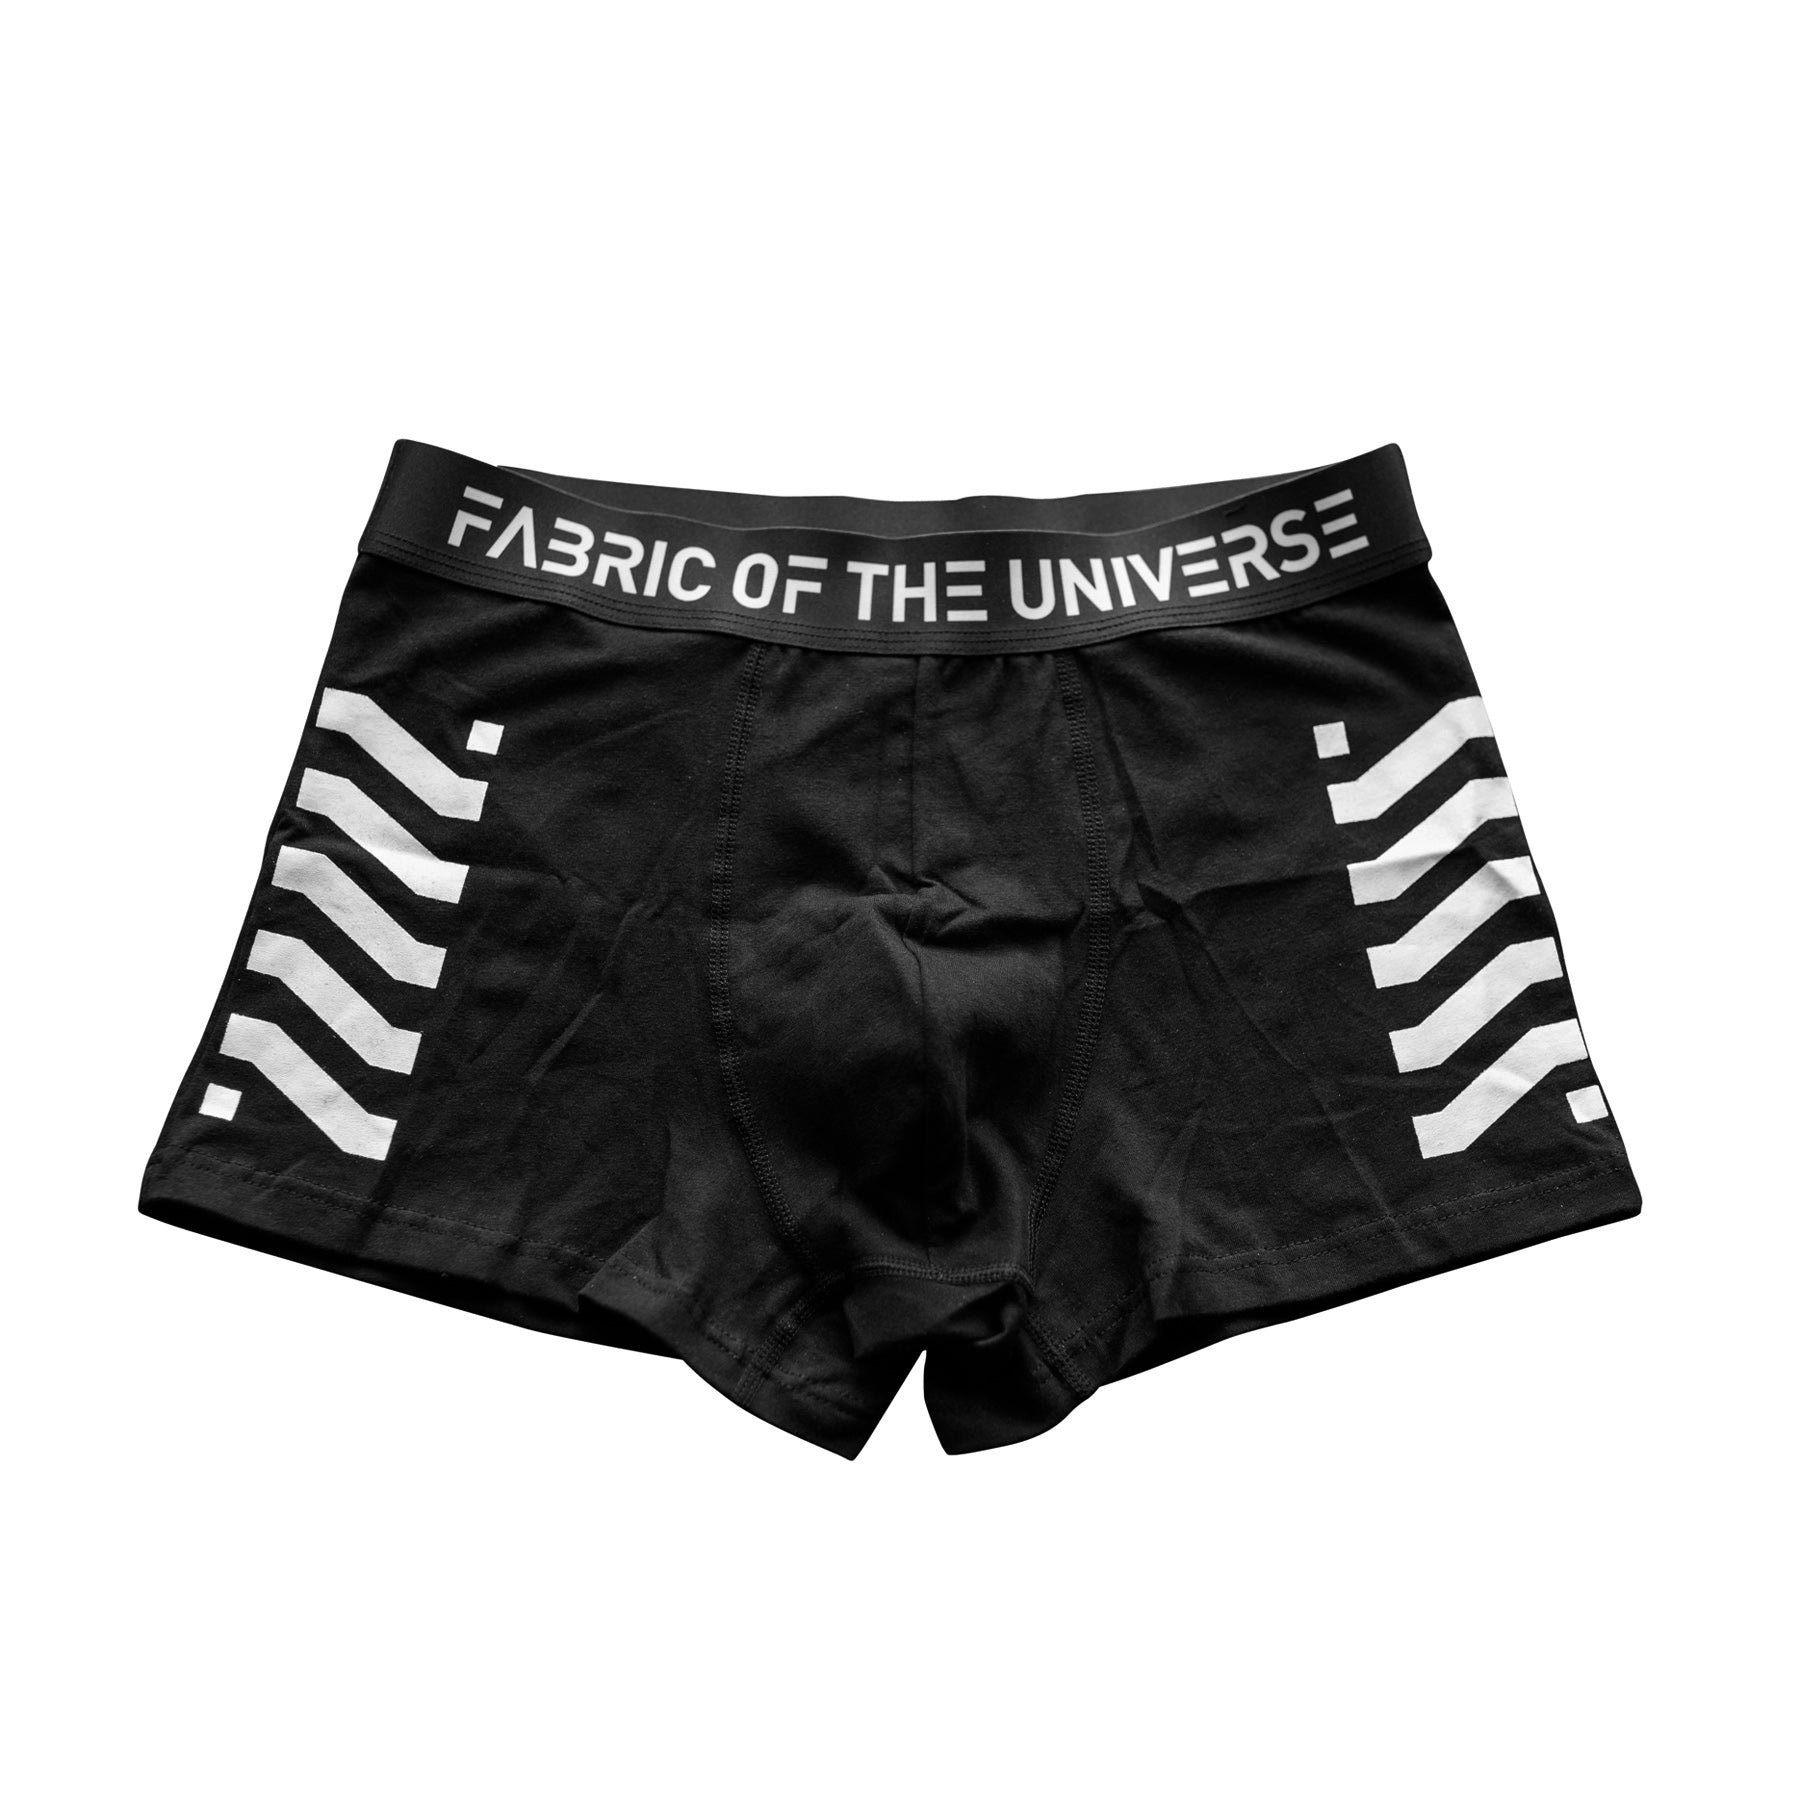 CSRT-01 Black Men's Boxer Brief - Fabric of the Universe